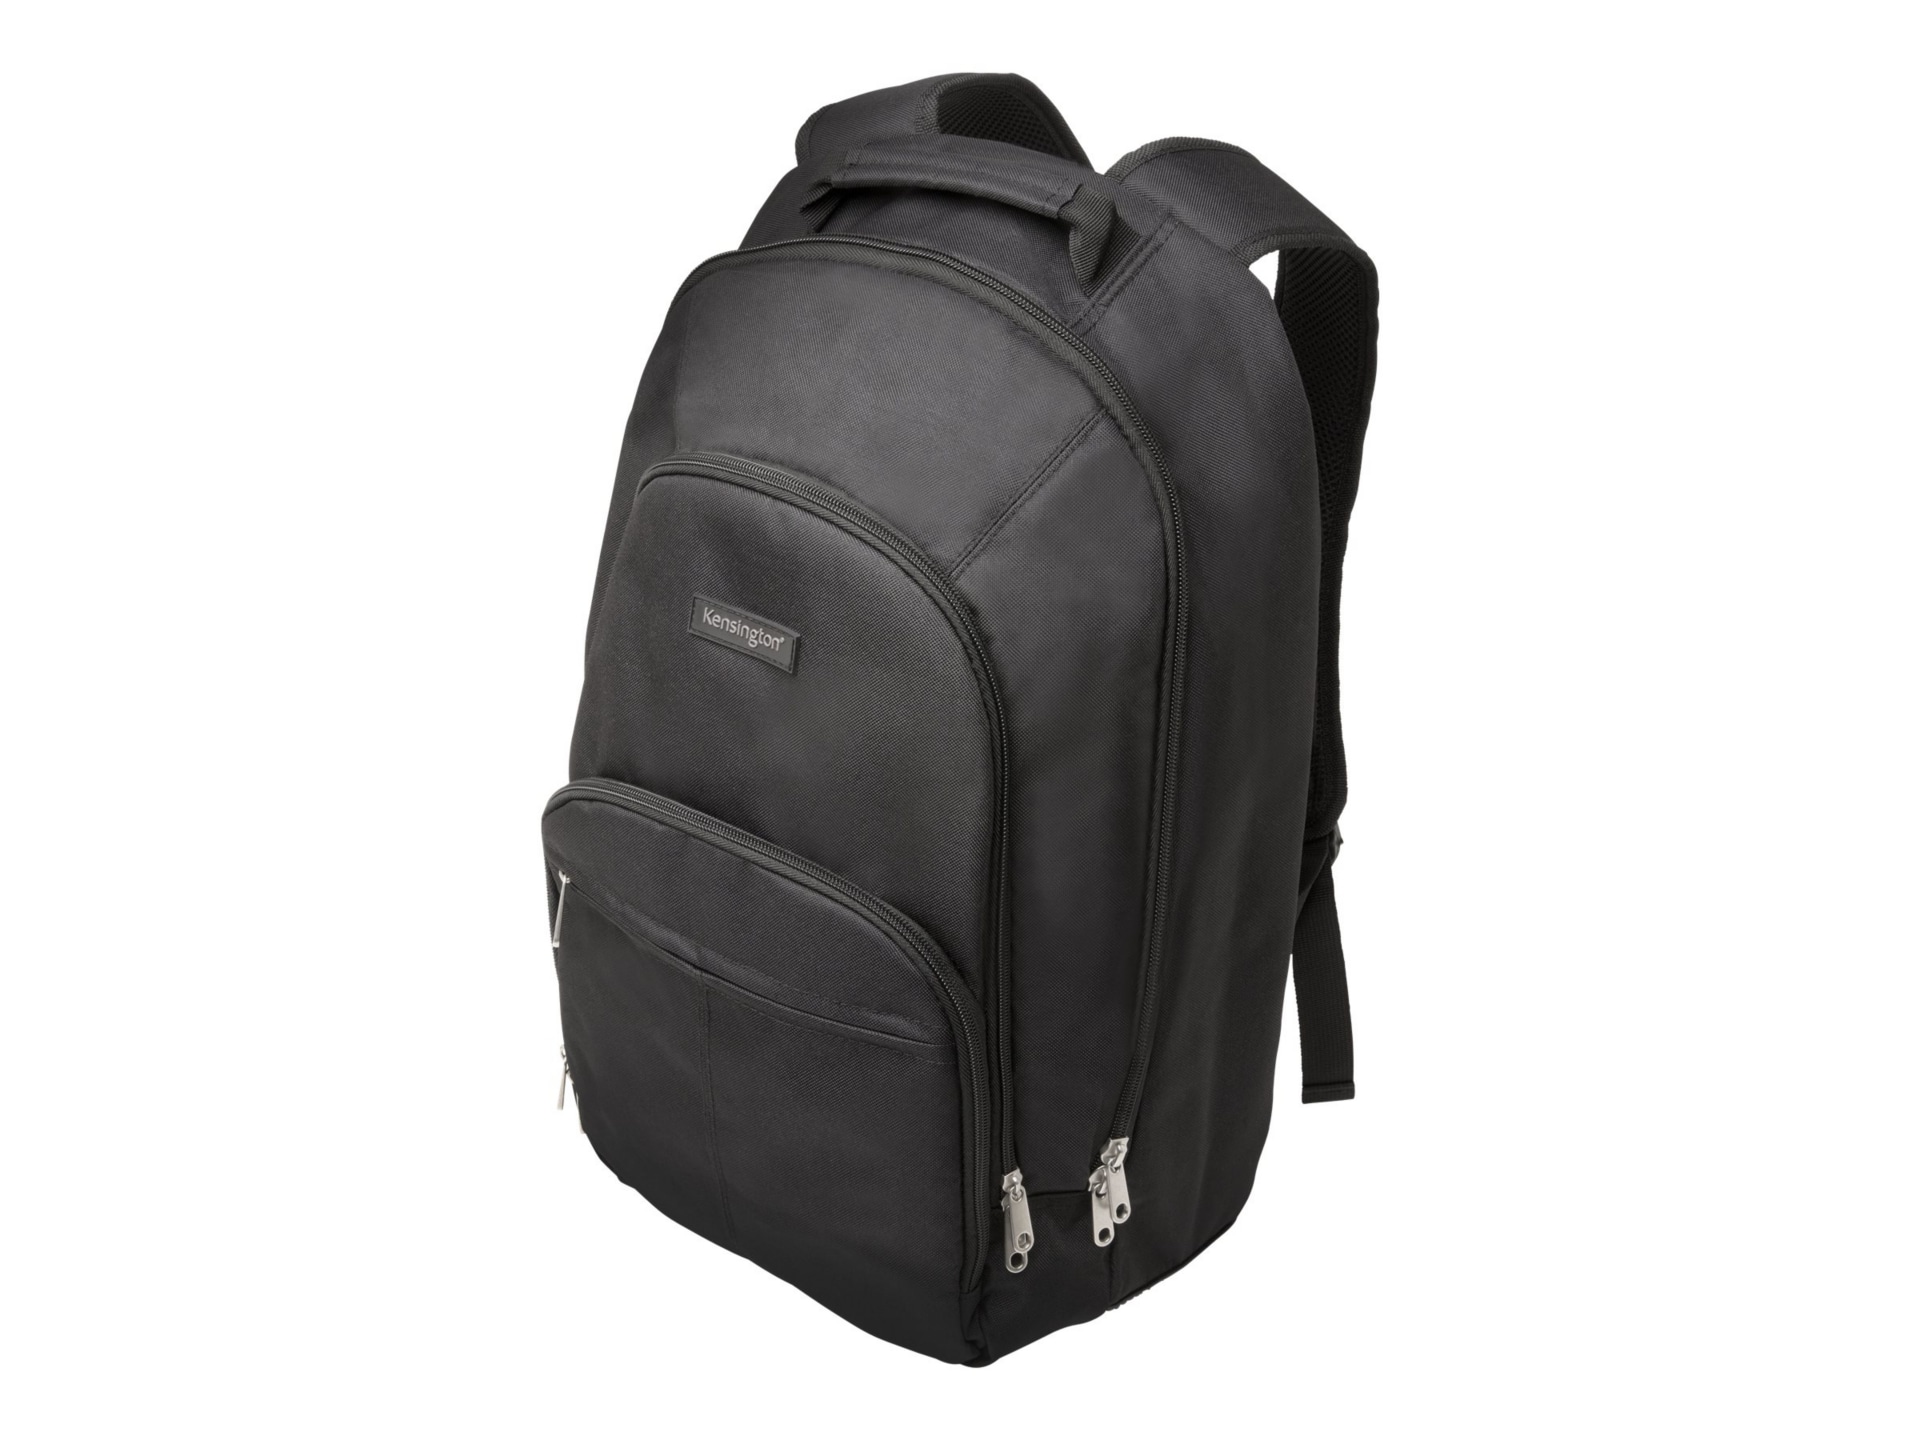 Kensington SP25 15.6" Laptop Backpack - notebook carrying backpack